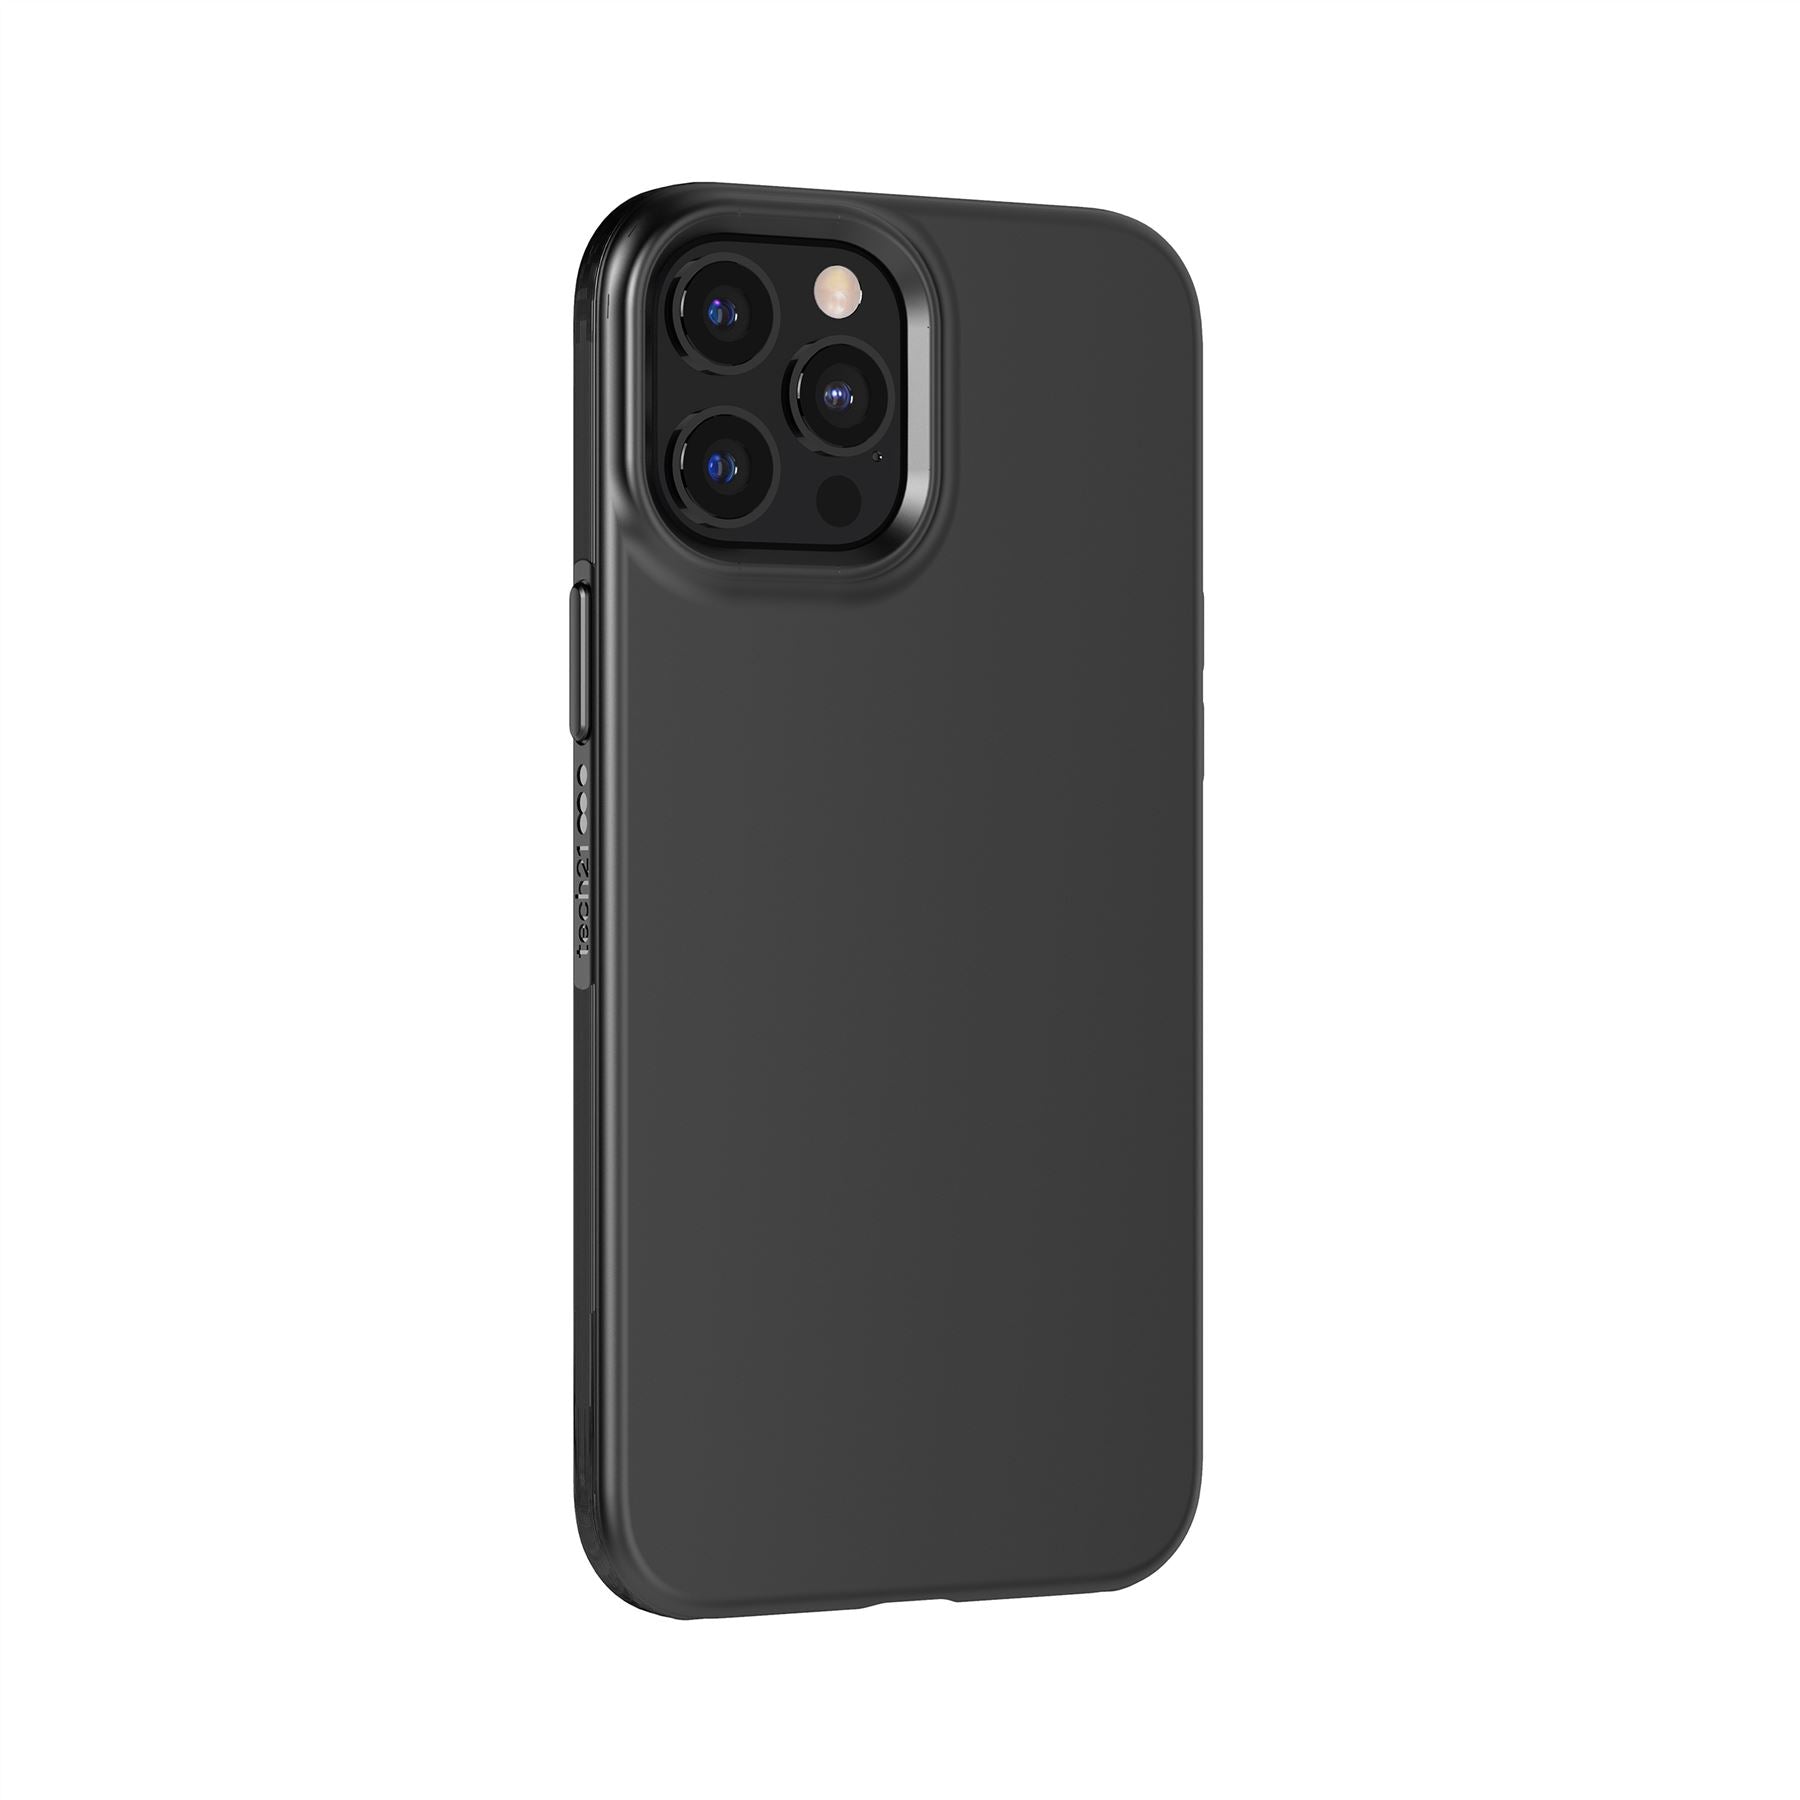 Evo Slim - Apple iPhone 12 Pro Max Case - Charcoal Black | Tech21 - US